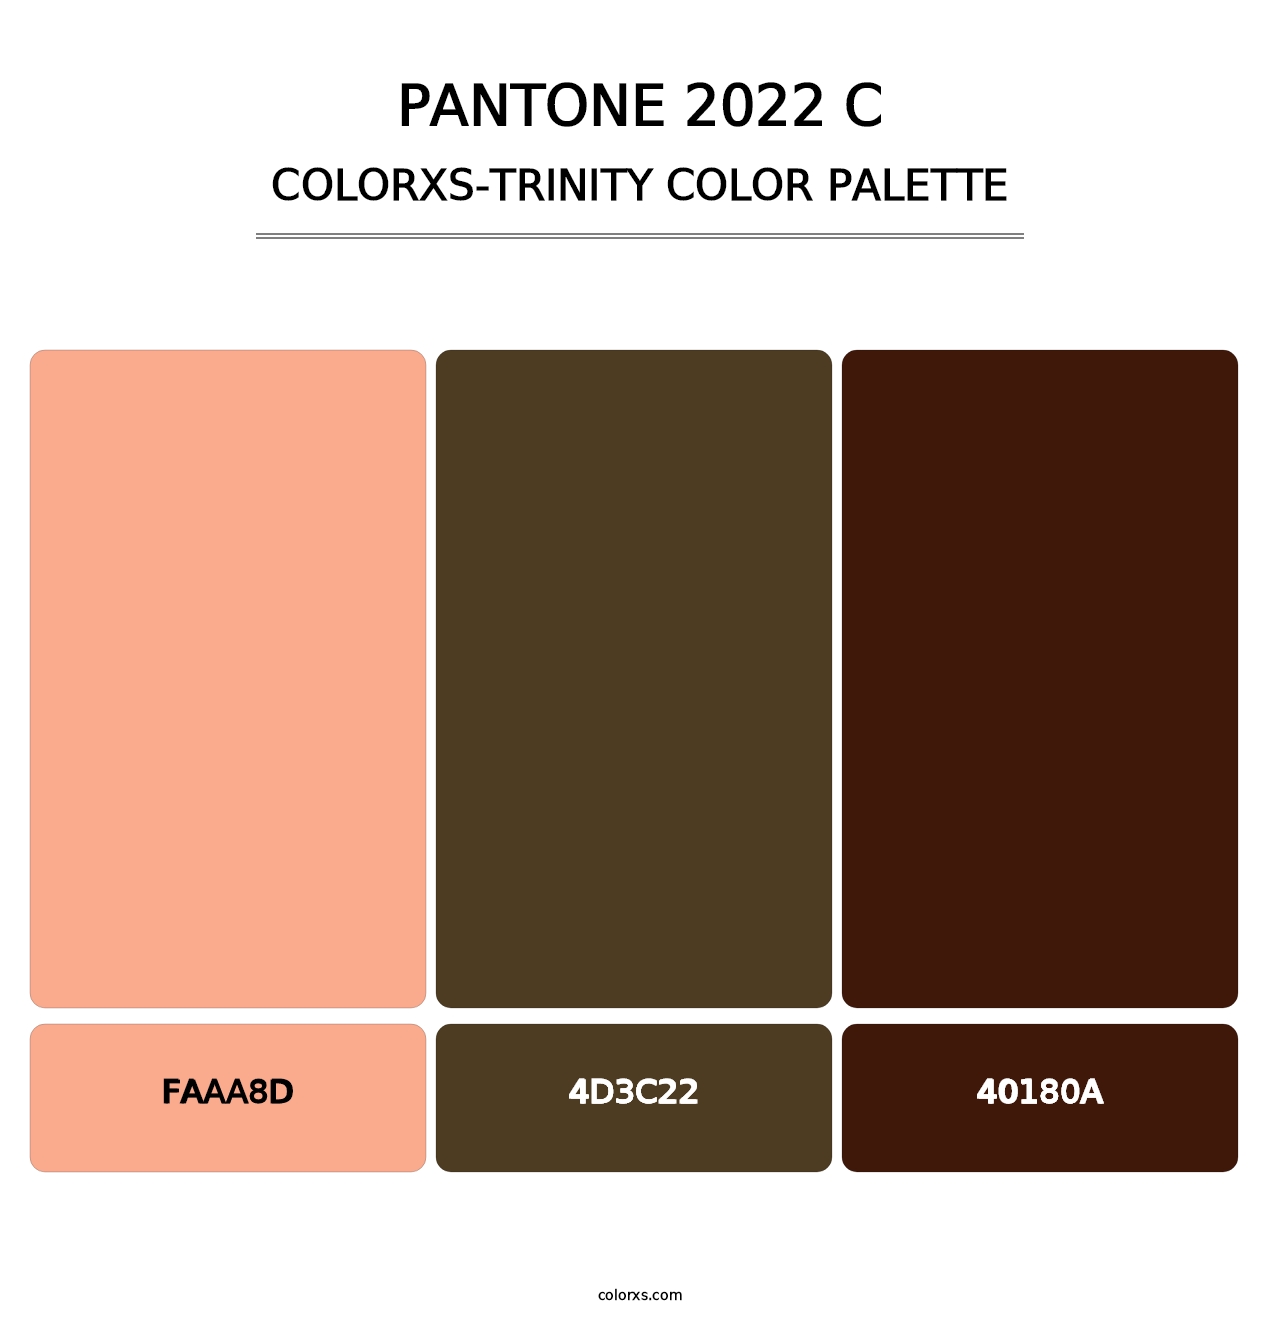 PANTONE 2022 C - Colorxs Trinity Palette